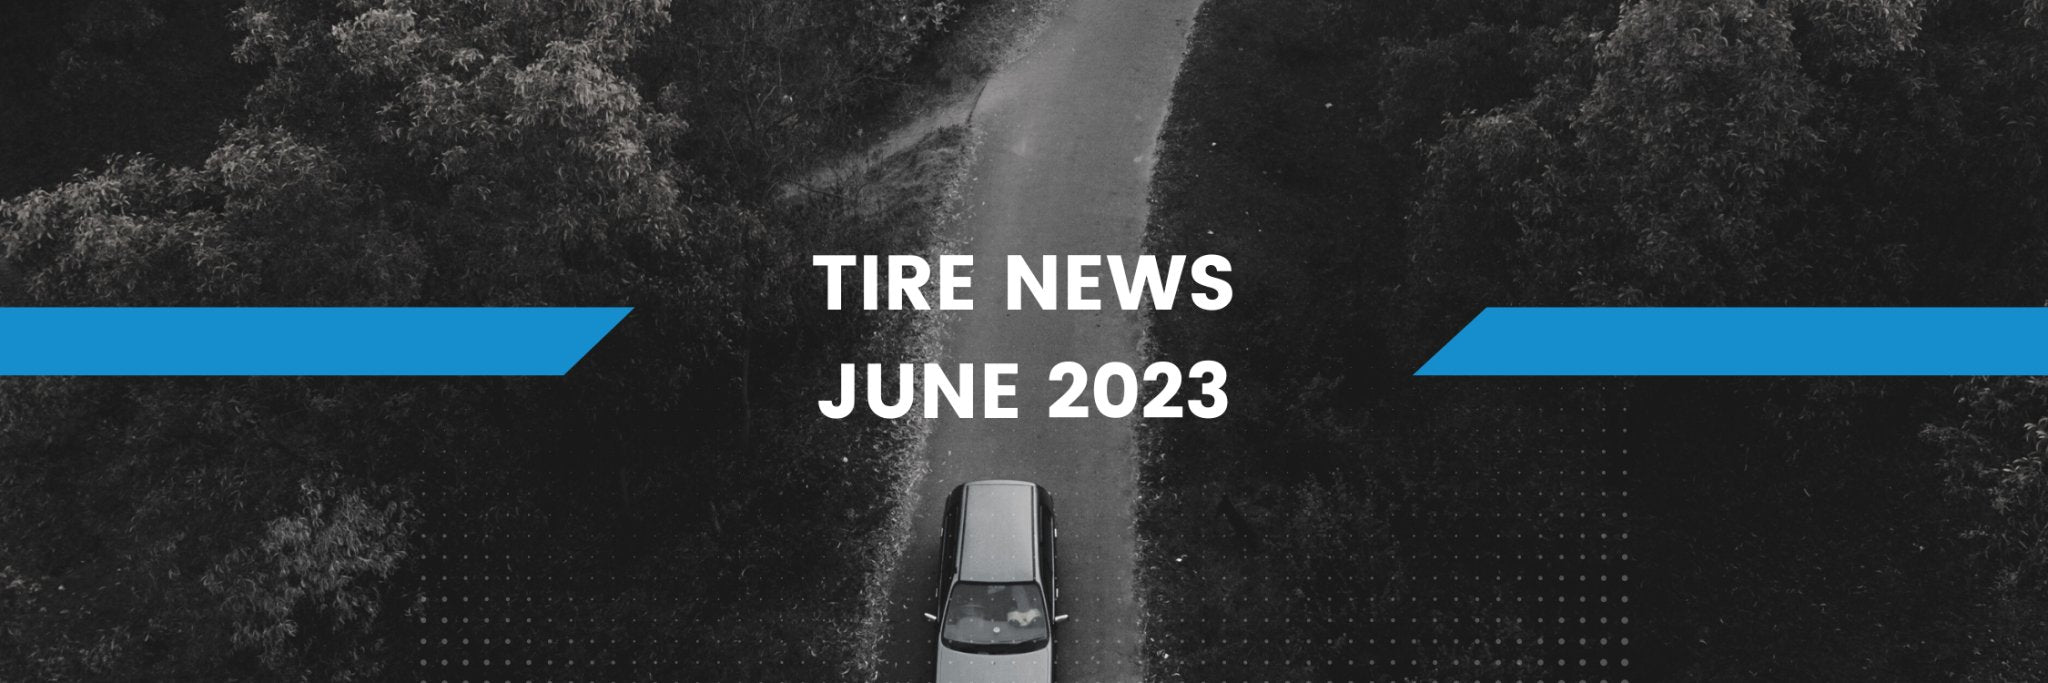 TIRE NEWS JUNE 2023 - Toee Tire